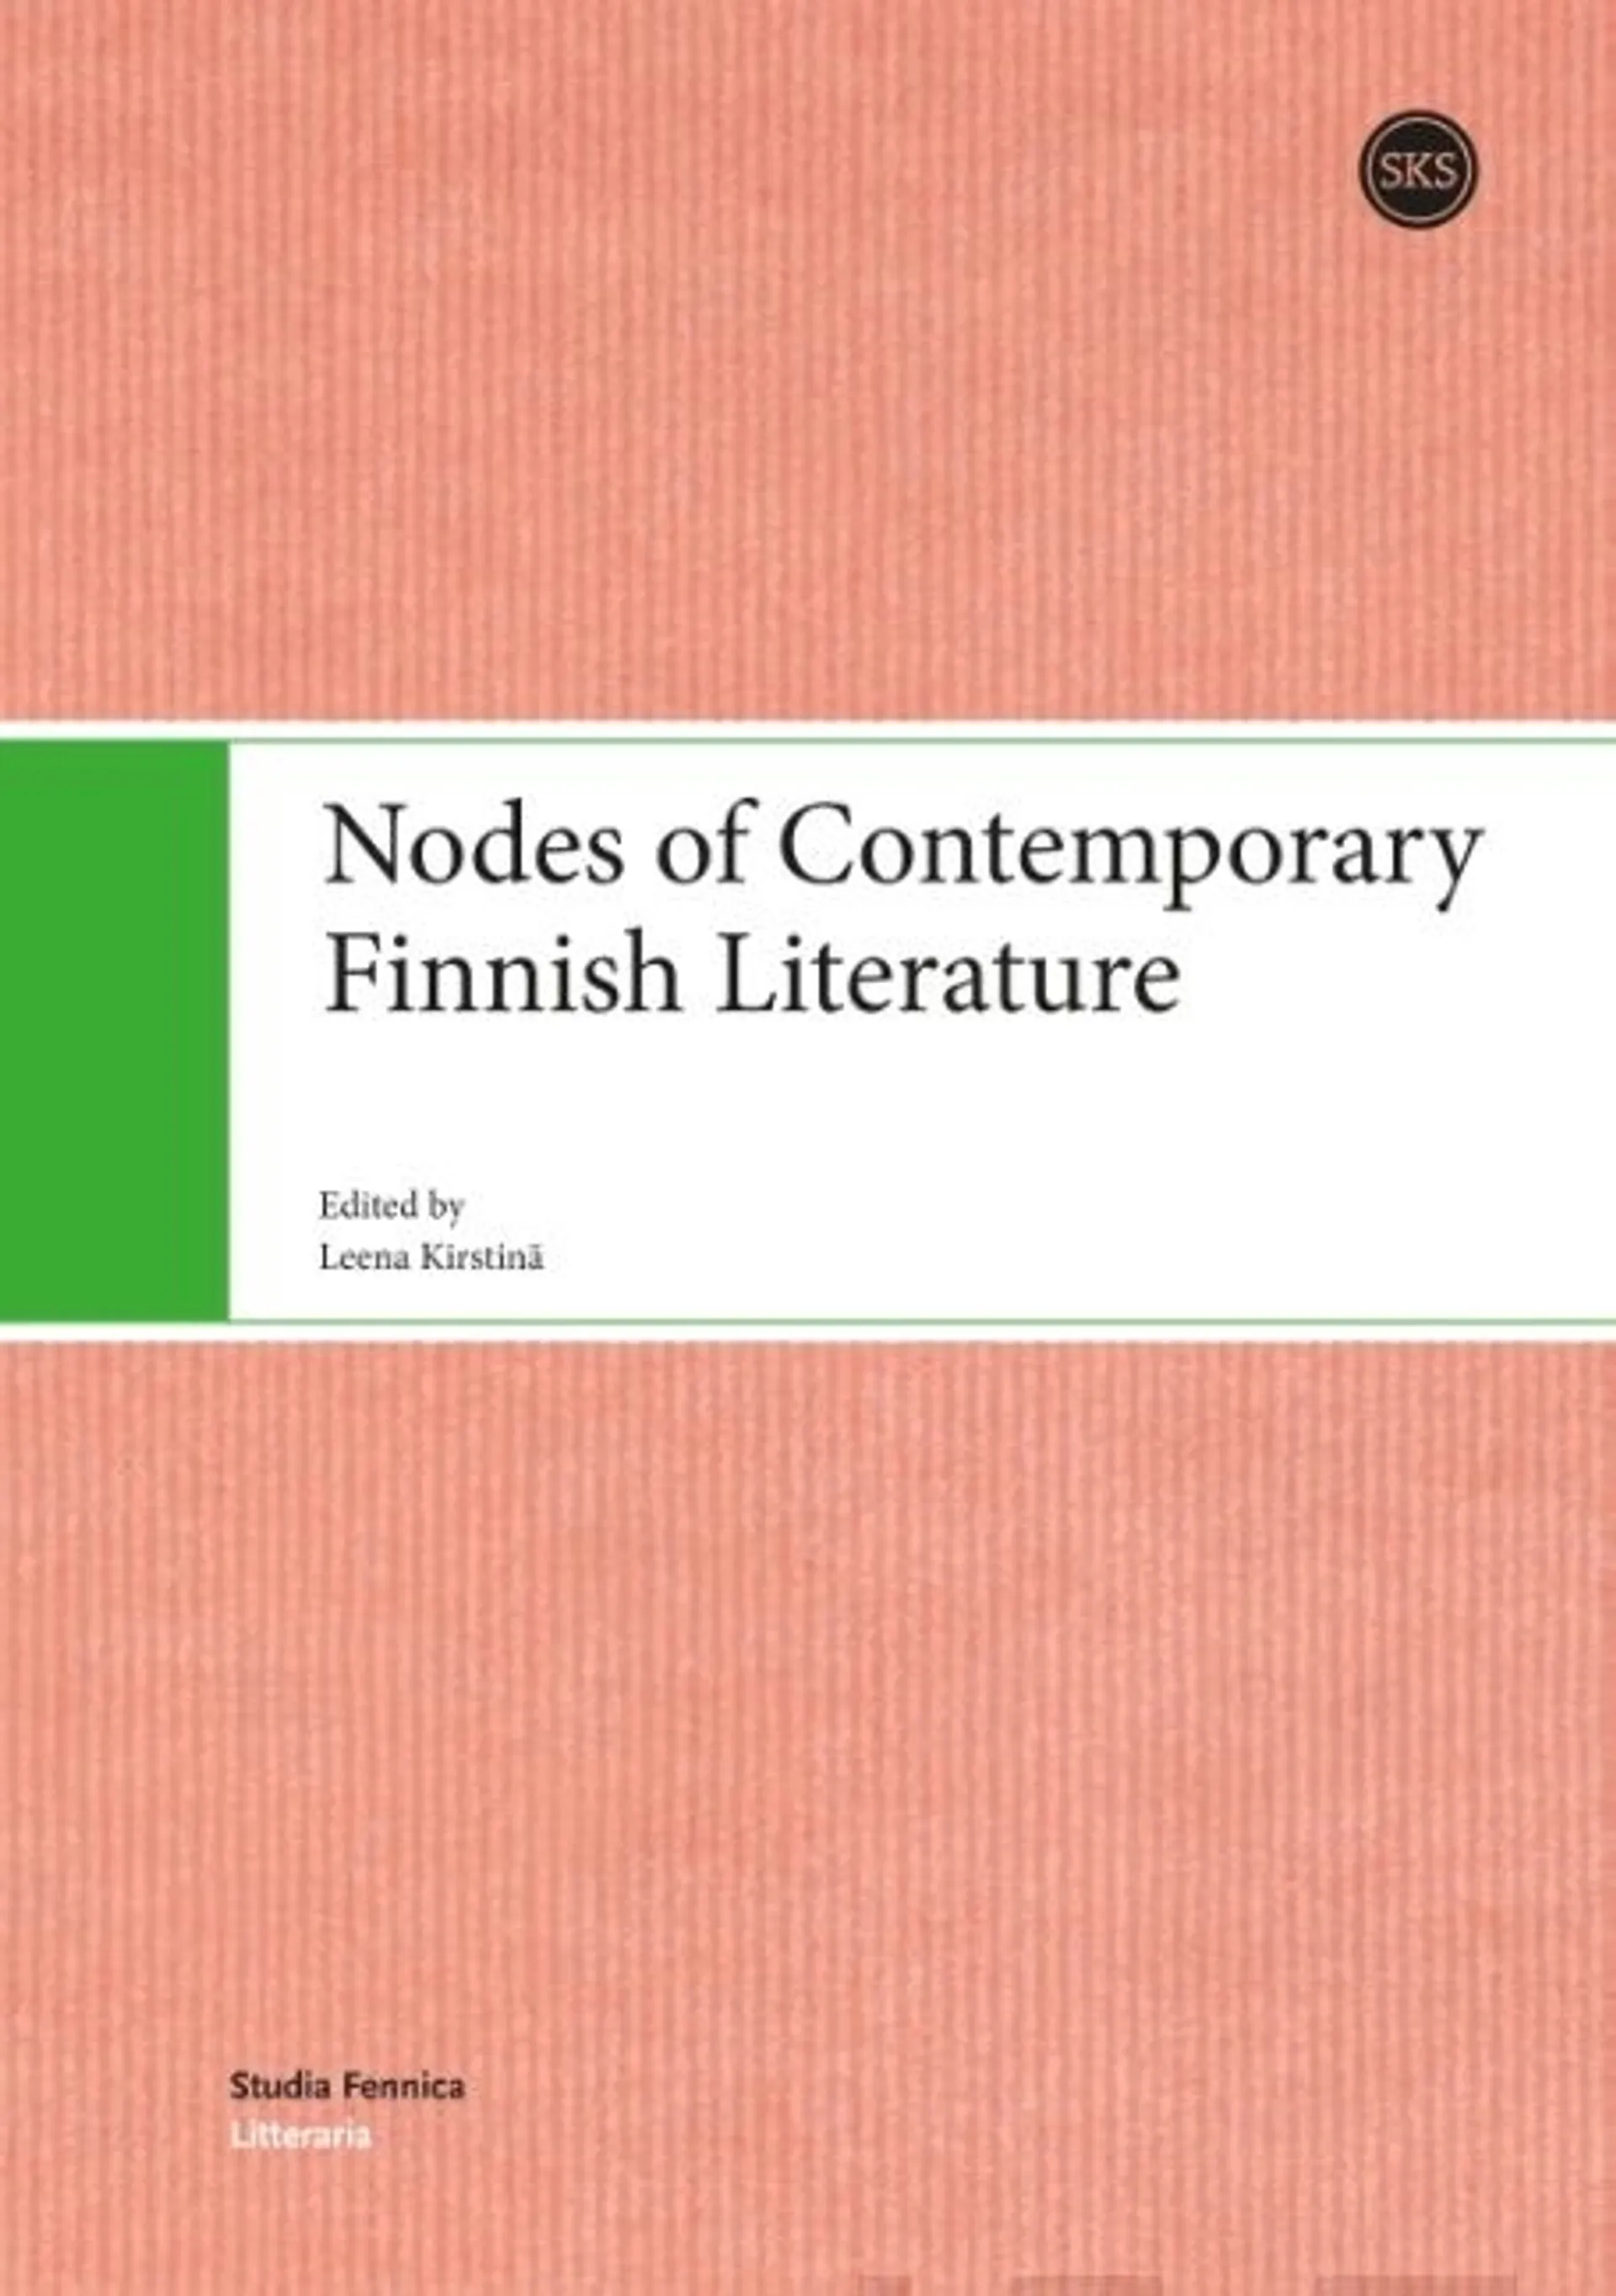 Kirstinä, Nodes of Contemporary Finnish Literature